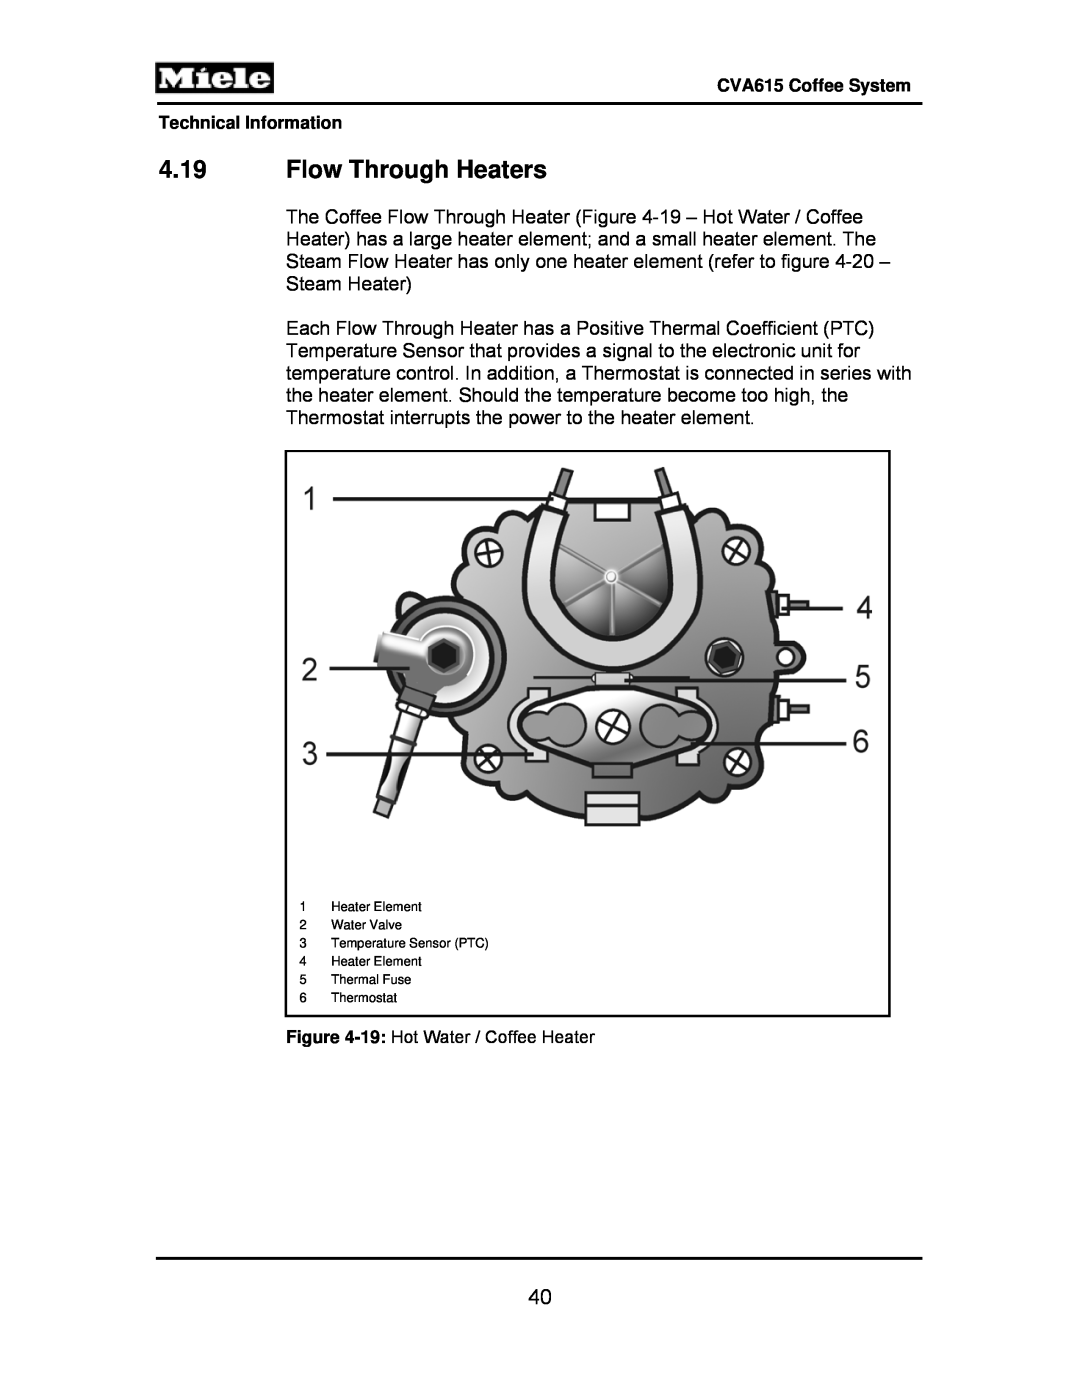 Miele CVA615 manual 4.19Flow Through Heaters, 19: Hot Water / Coffee Heater 